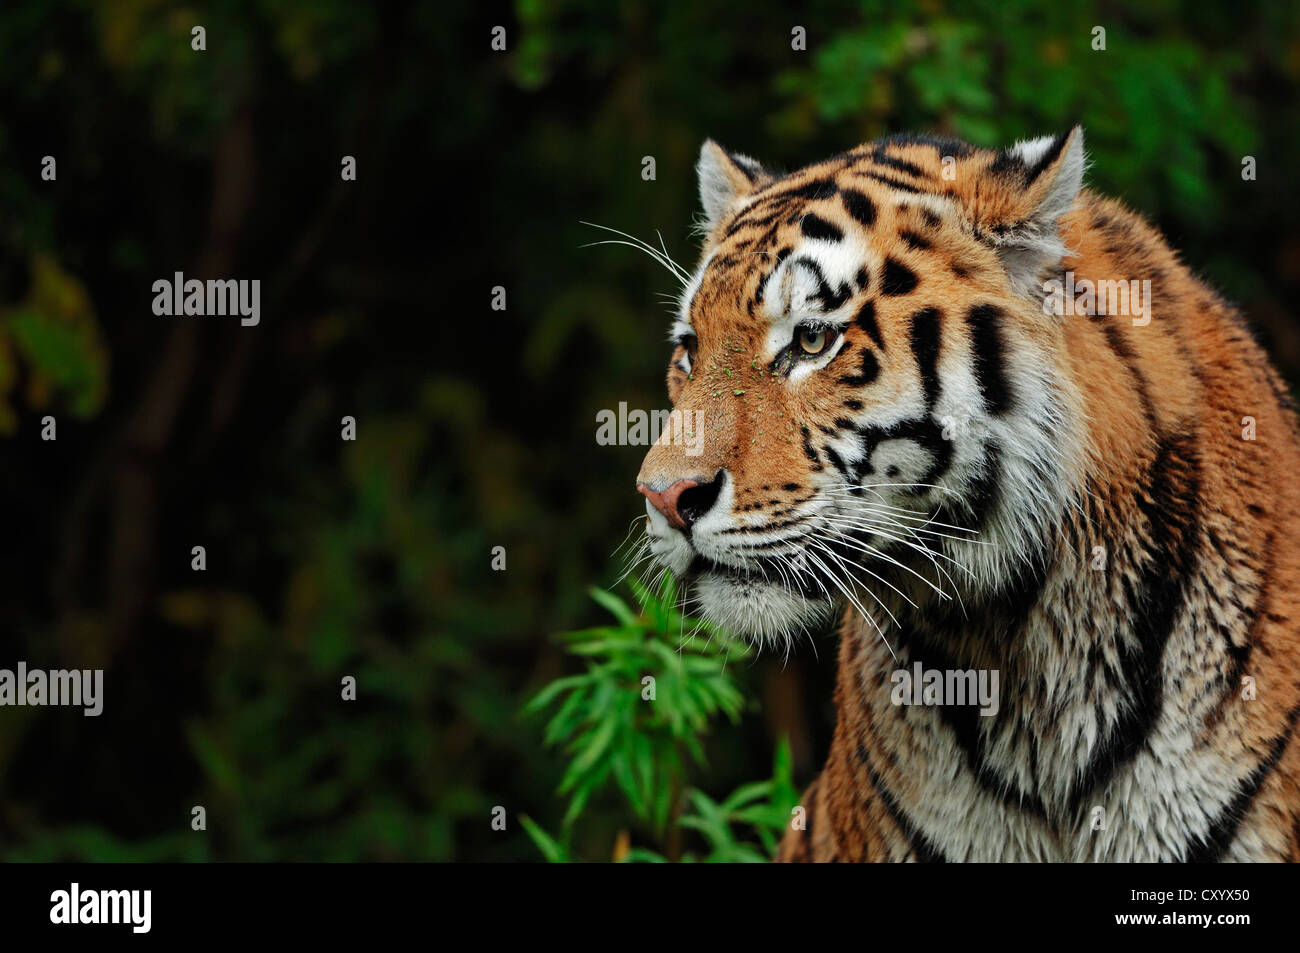 Siberian tiger or Amur tiger (Panthera tigris altaica), portrait, Asian species, captive, The Netherlands, Europe Stock Photo